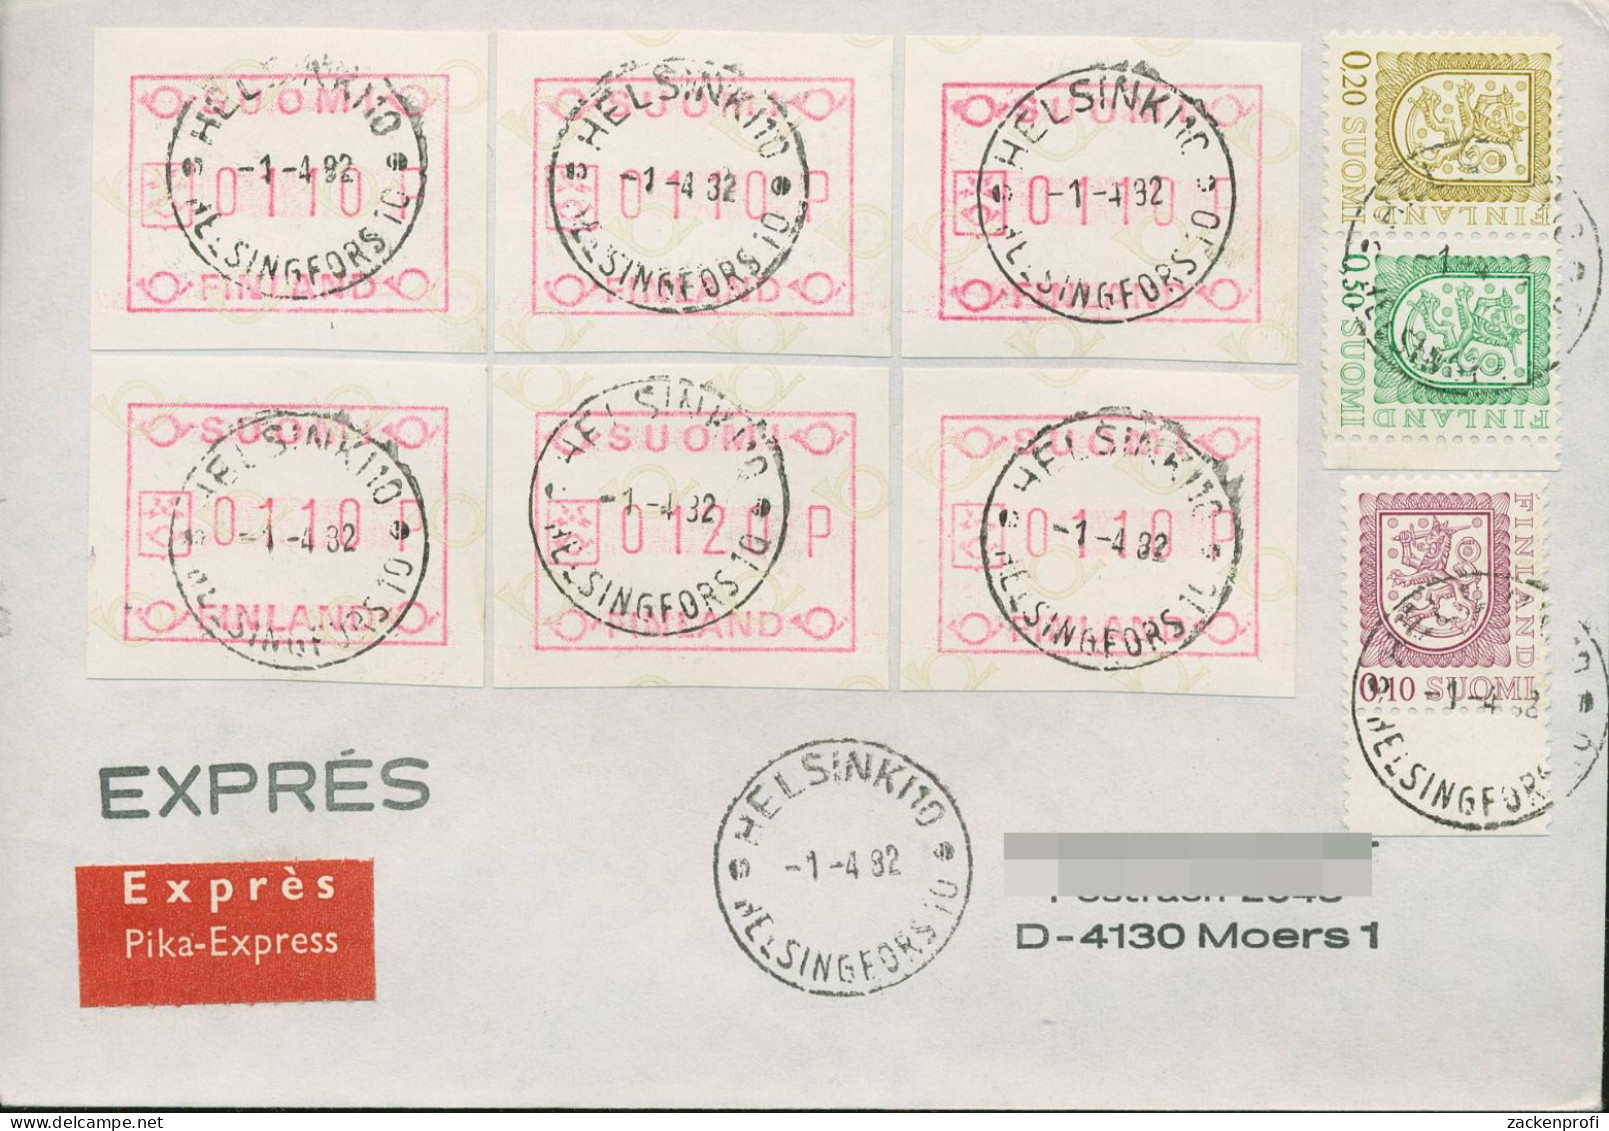 Finnland ATM 1982 Kl. Posthörner, FDC ATM 1.1 Auf Express-Brief (X80556) - Vignette [ATM]